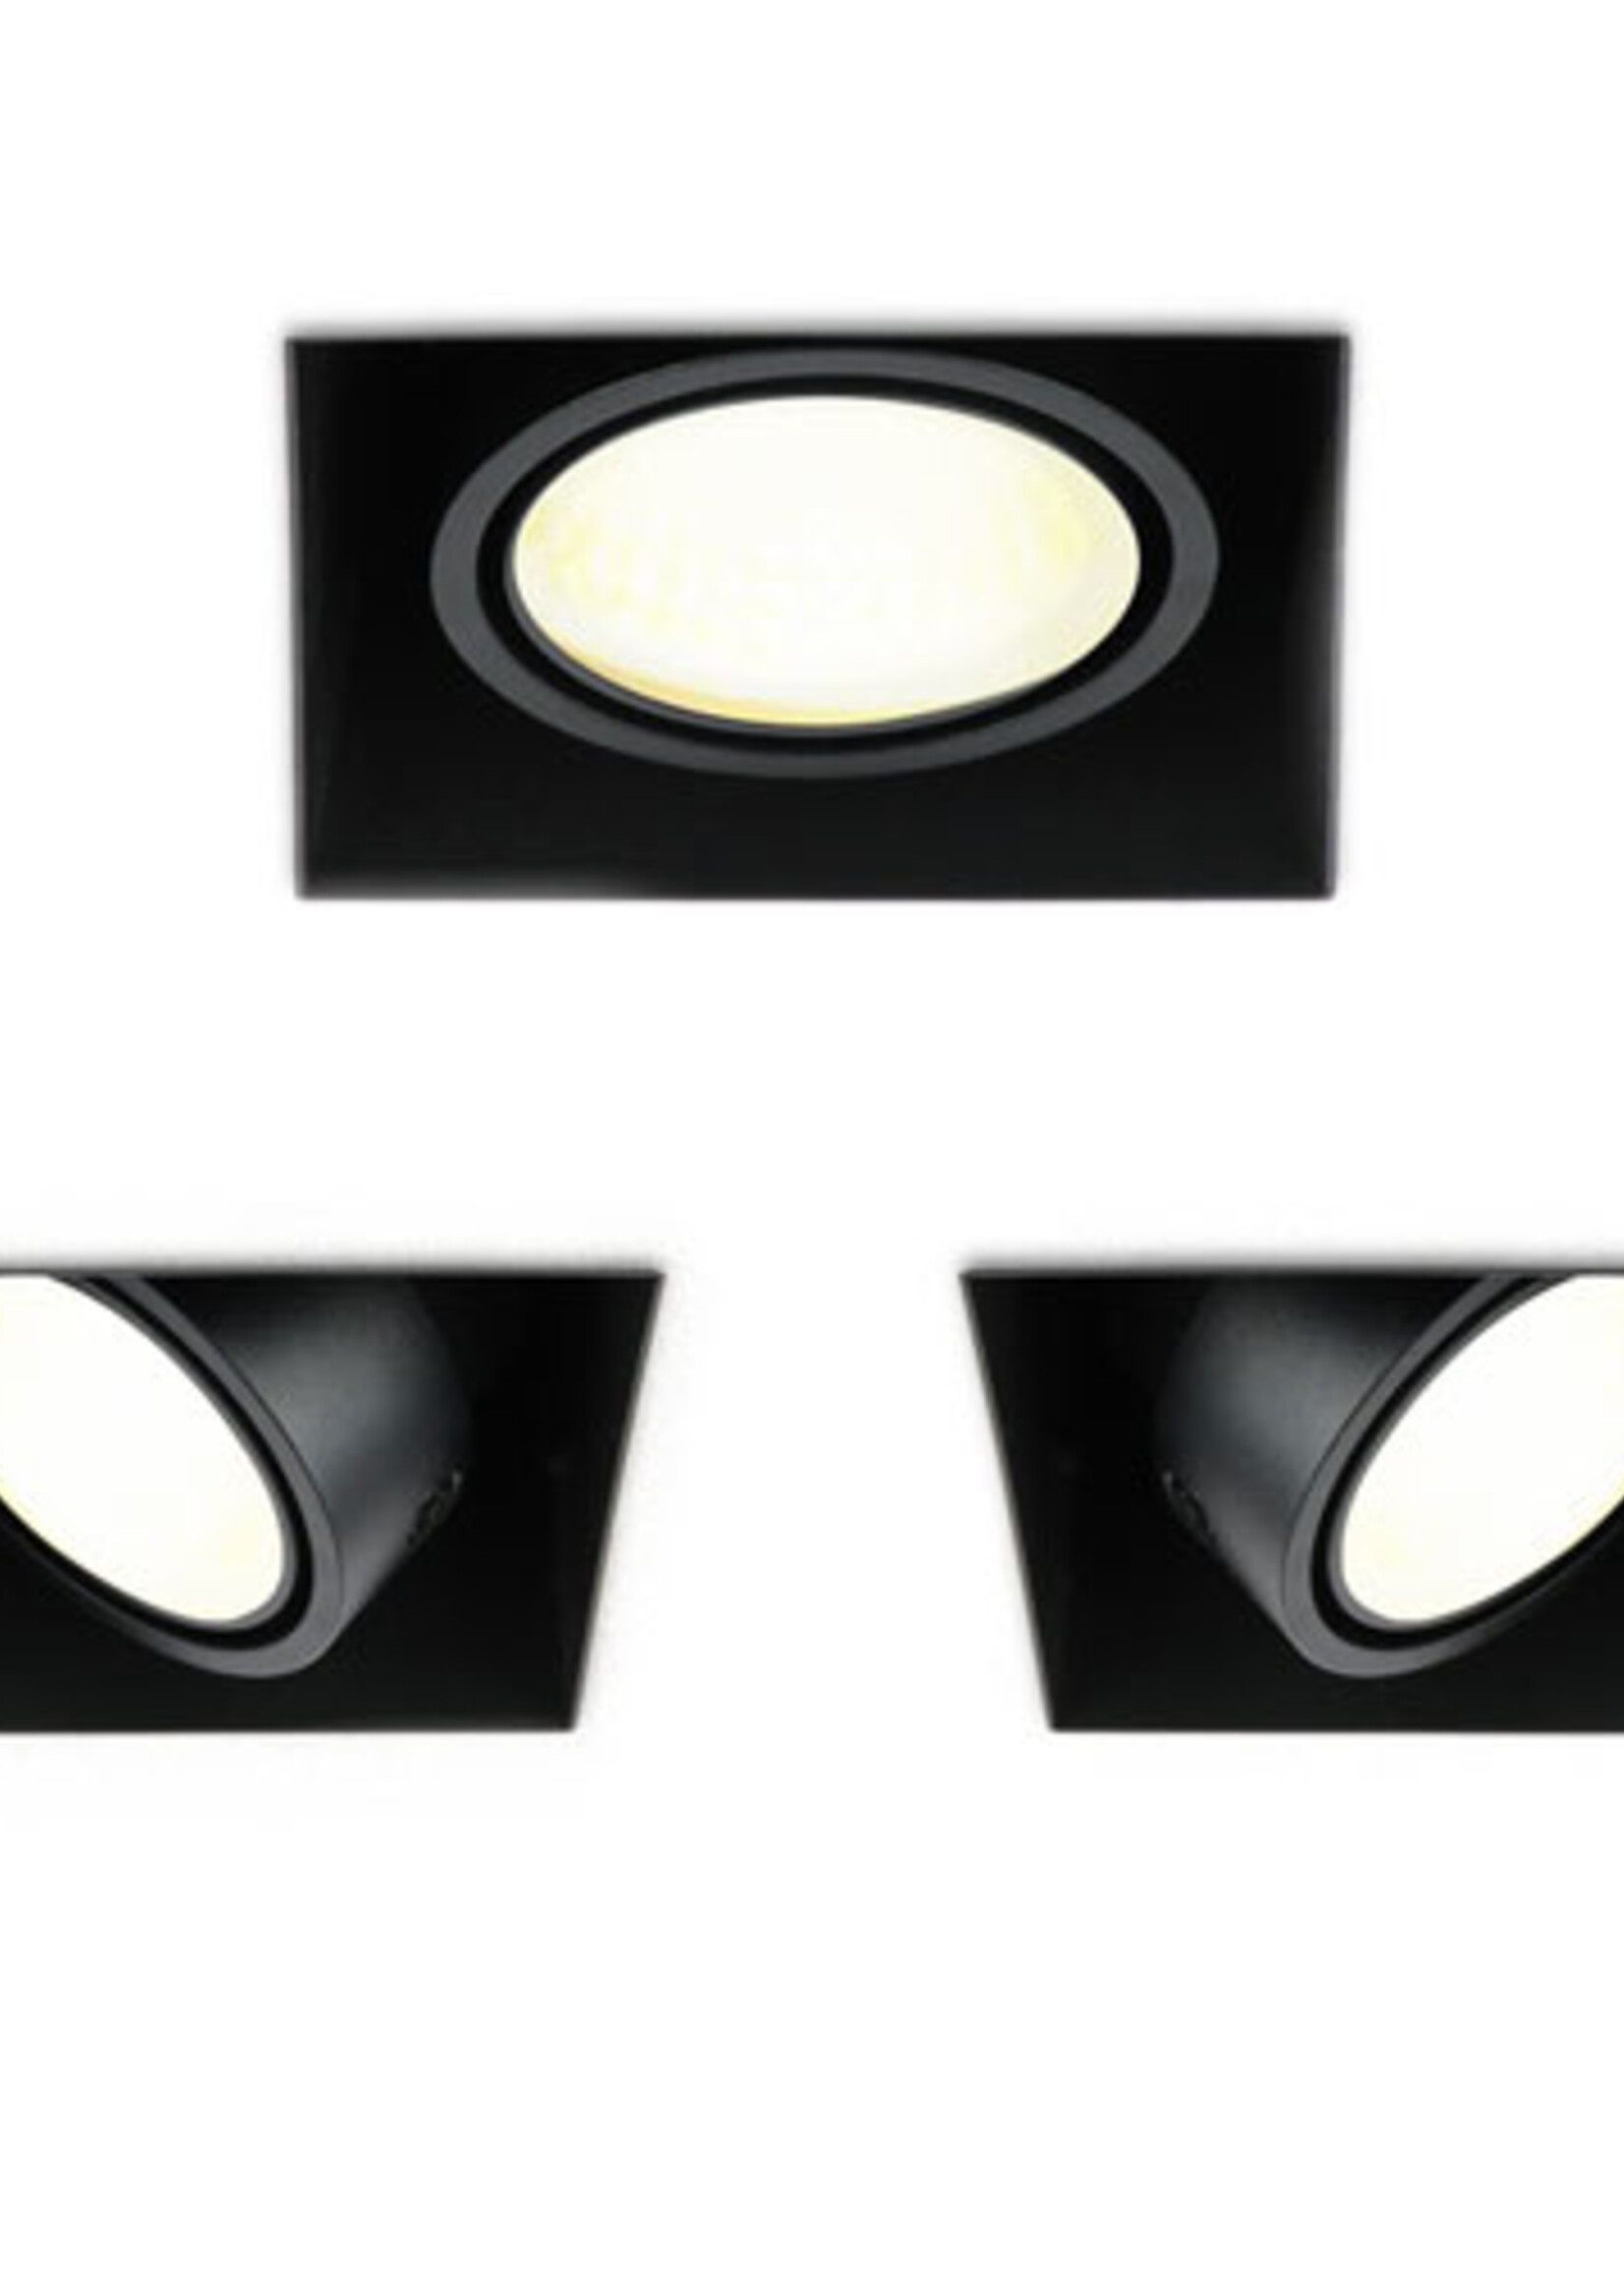 SOLISTECH Black LED Downlight 6W Trimless 3000K warm white square 89x89mm tiltable rotatable